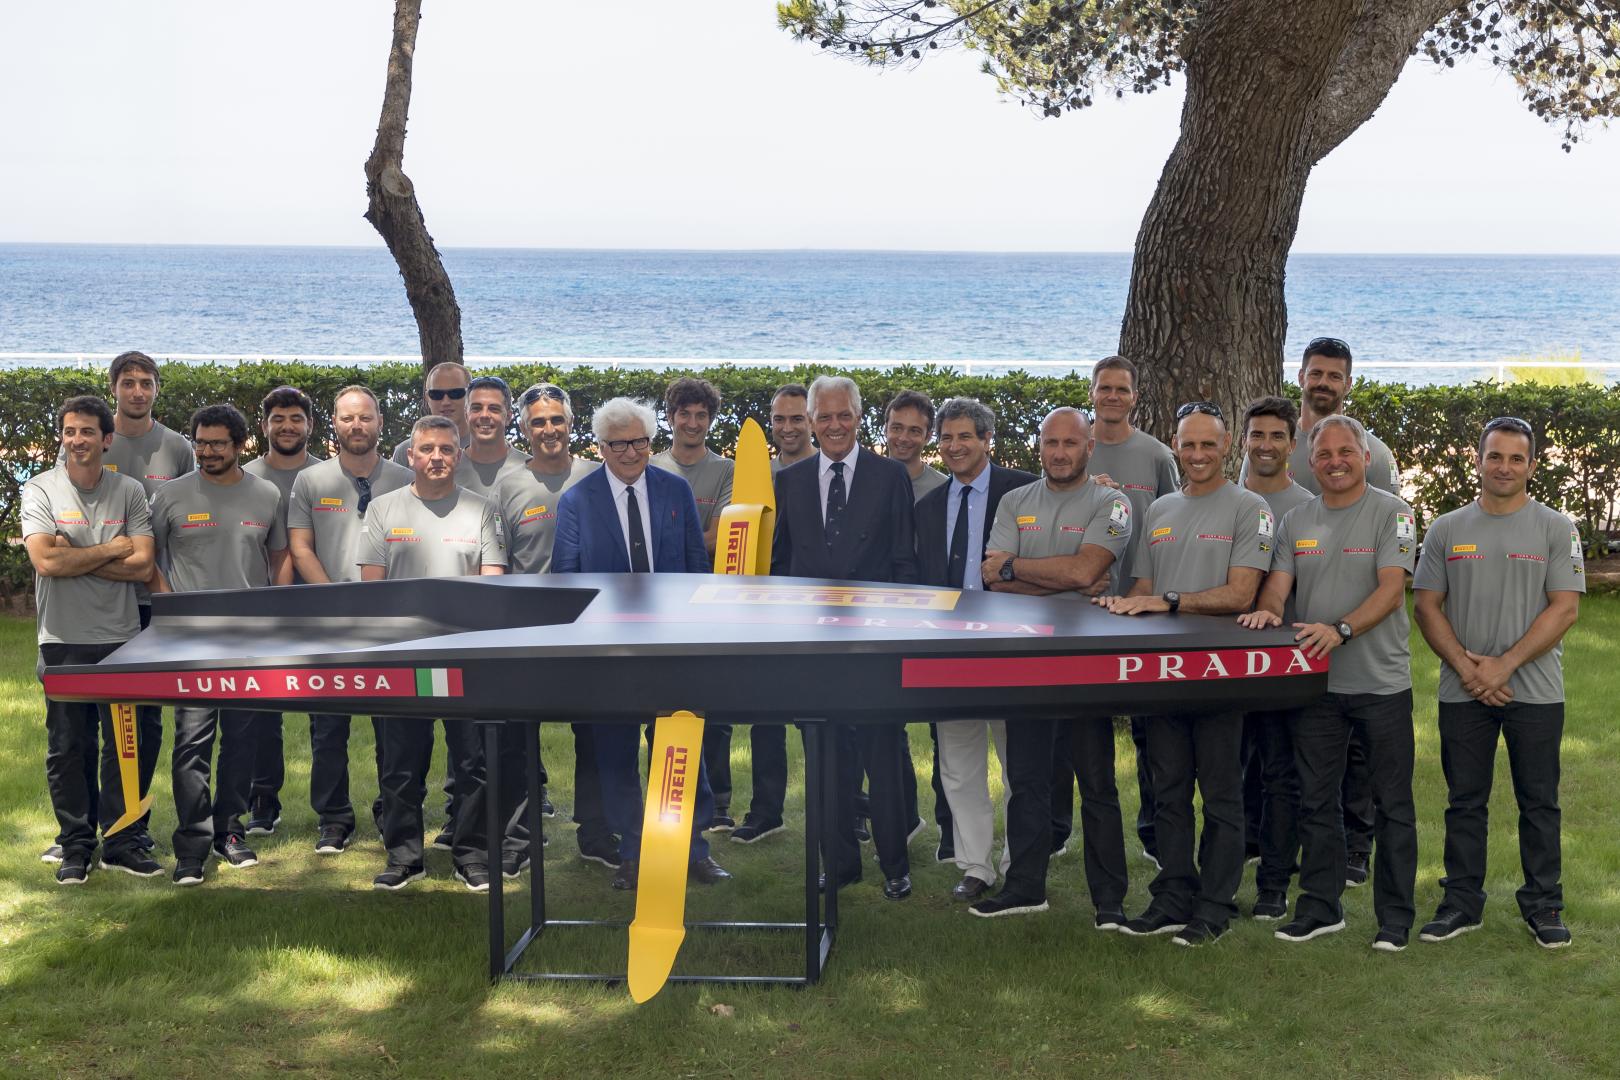 Luna Rossa Prada Pirelli Team was officially presented